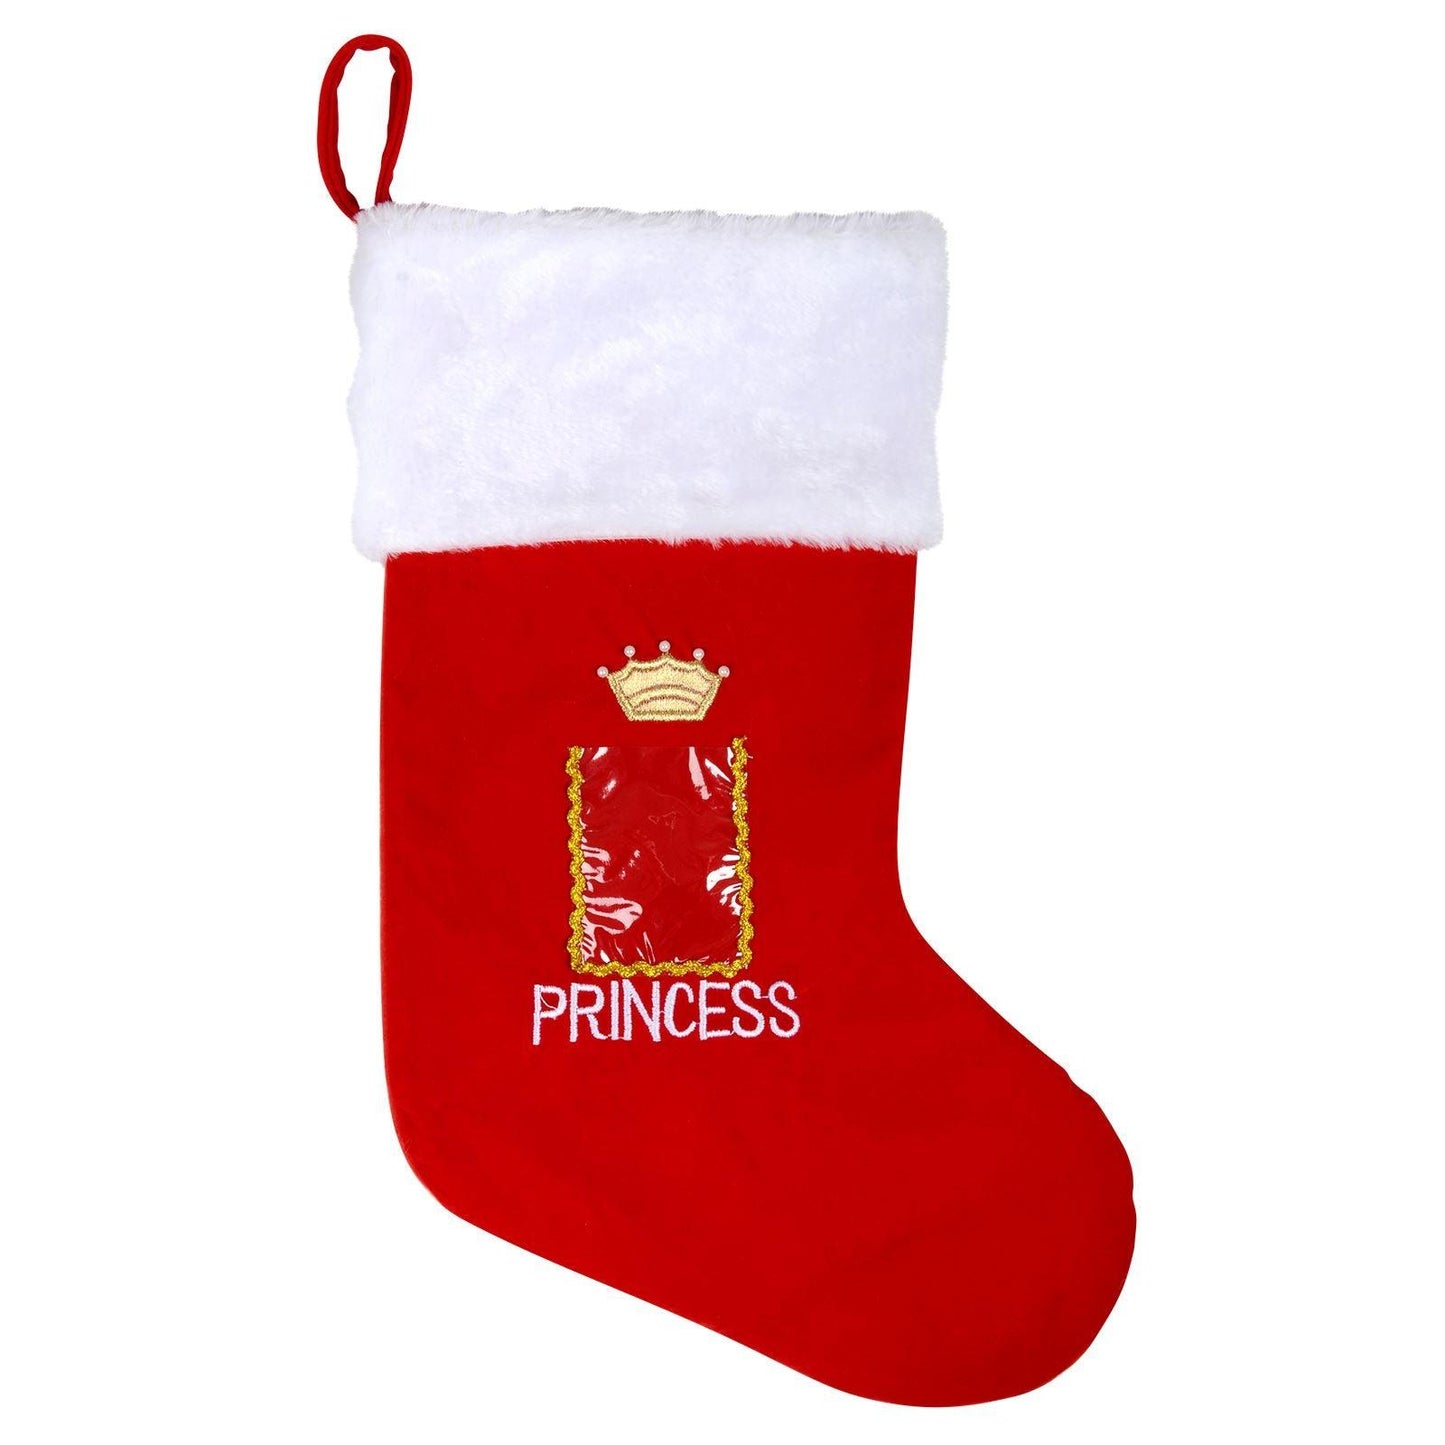 Mr Crimbo 17" Christmas Stocking Red Prince Princess Photo - MrCrimbo.co.uk -XS3697 - Princess -christmas stocking